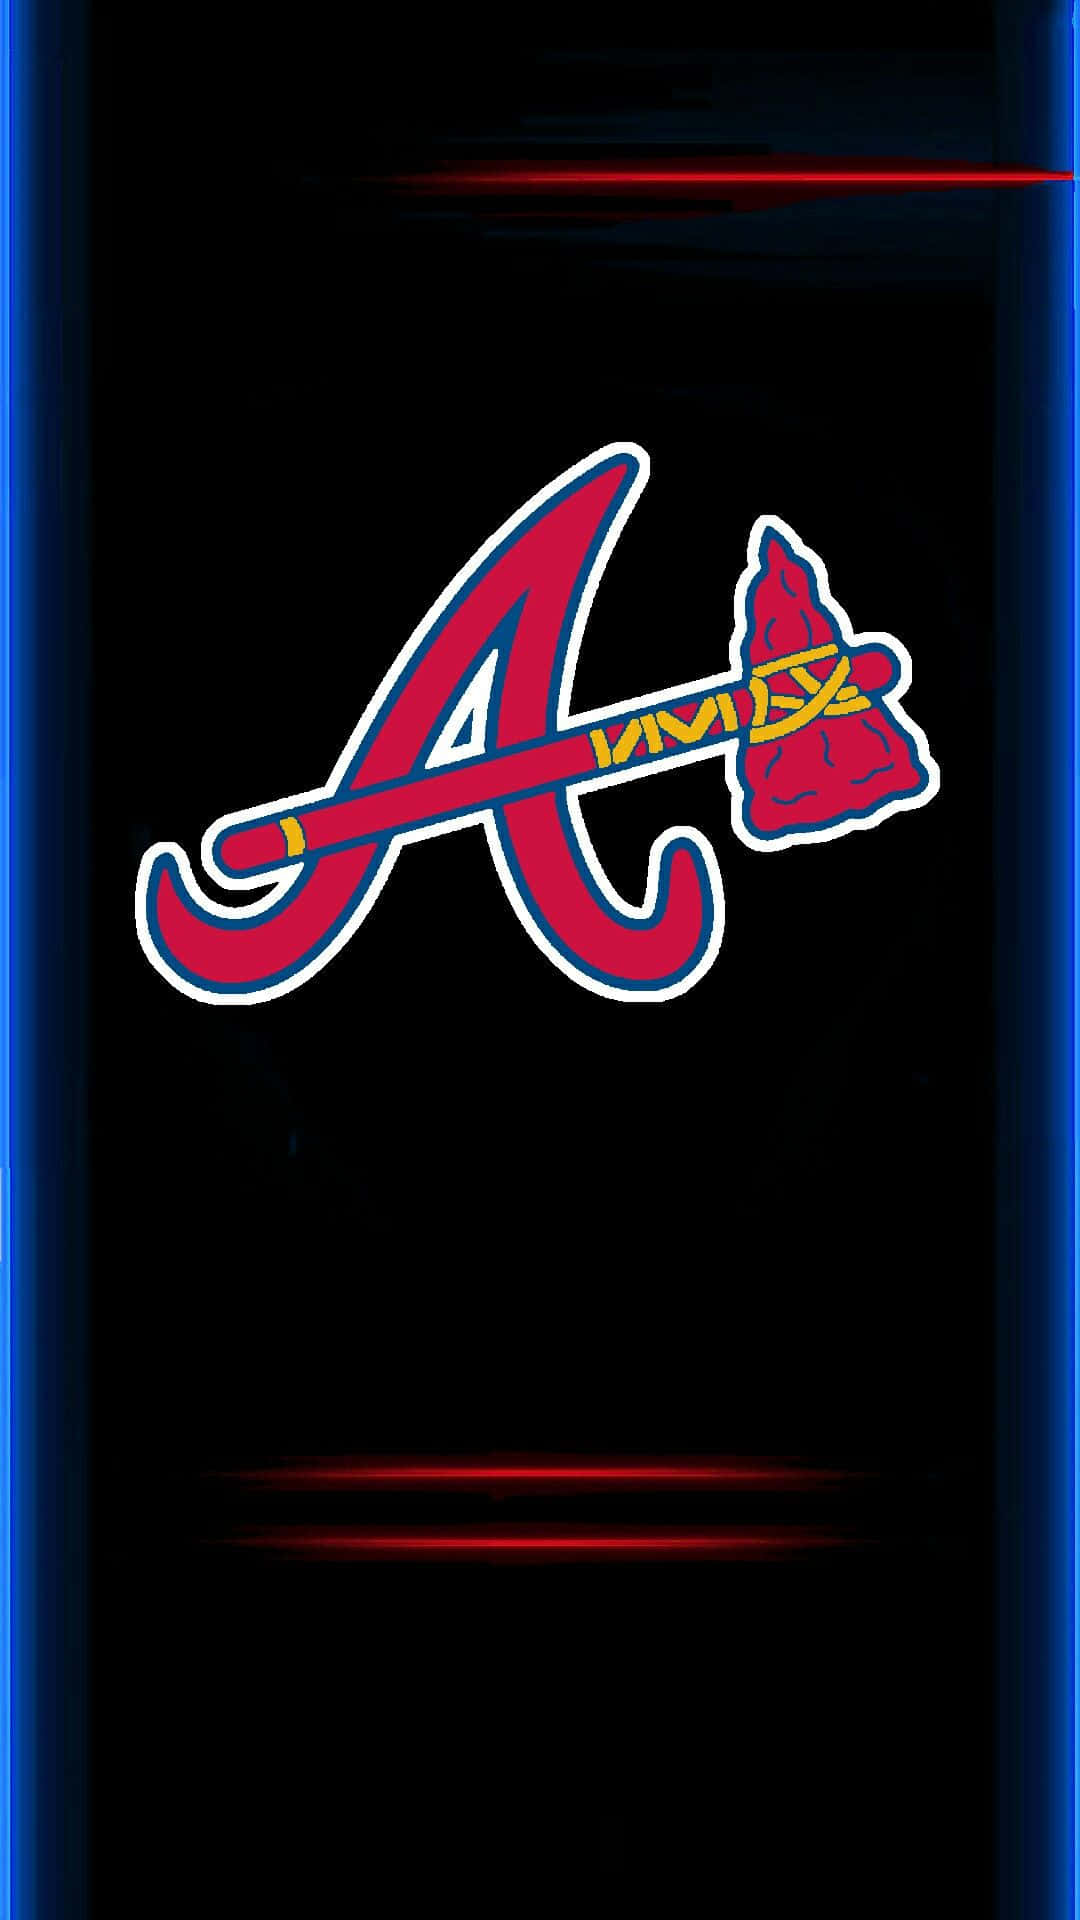 Atlanta Braves wallpaper by bm3cross  Download on ZEDGE  4c49